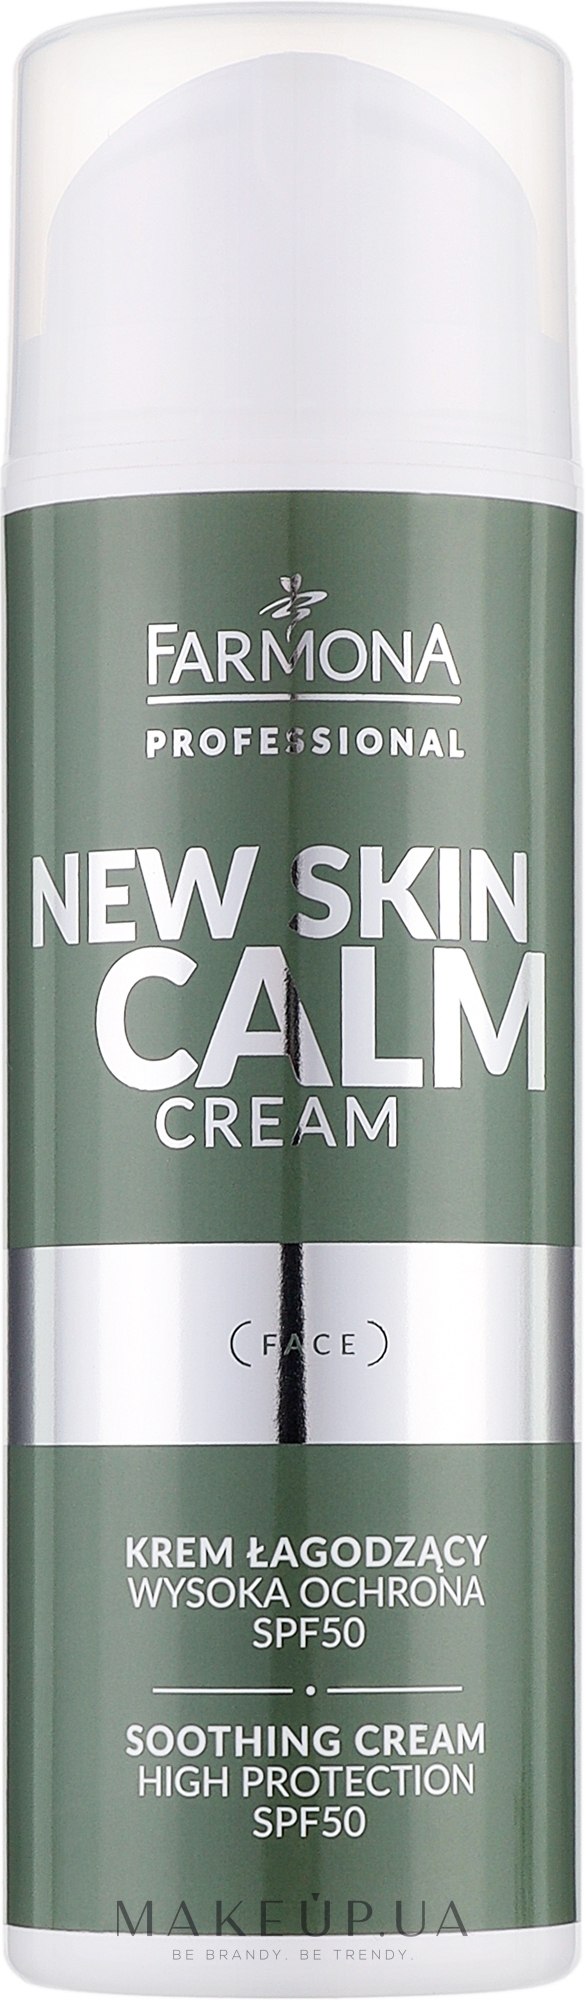 Успокаивающий крем для лица - Farmona Professional New Skin Calm Cream Face Soothing Cream High Protection SPF 50 — фото 150ml